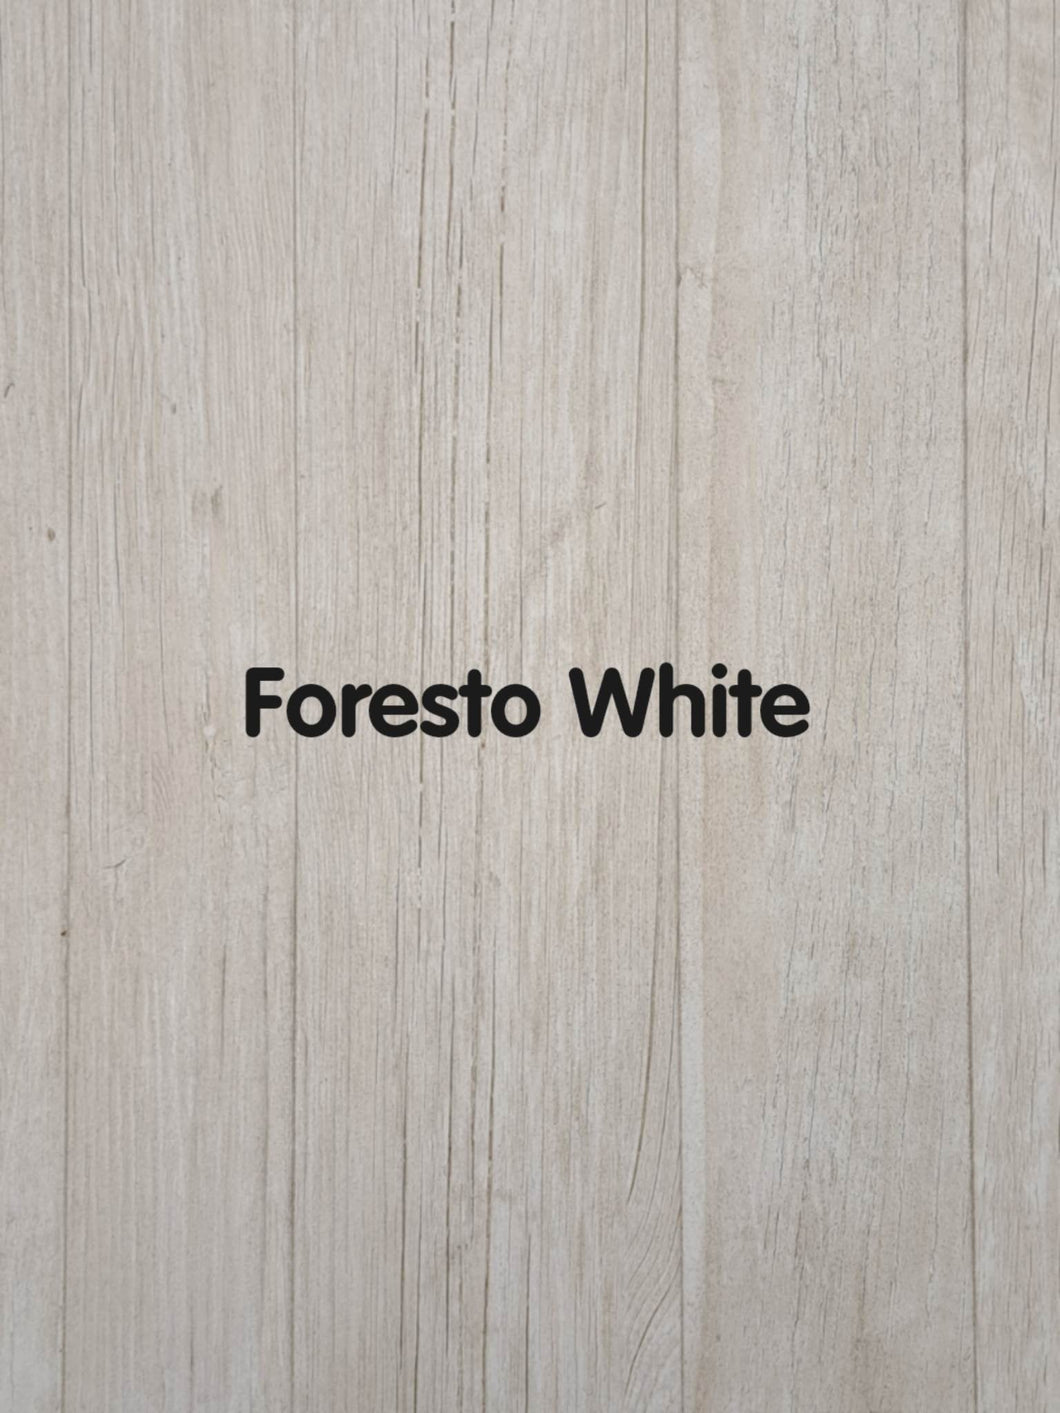 Foresto White.jpg